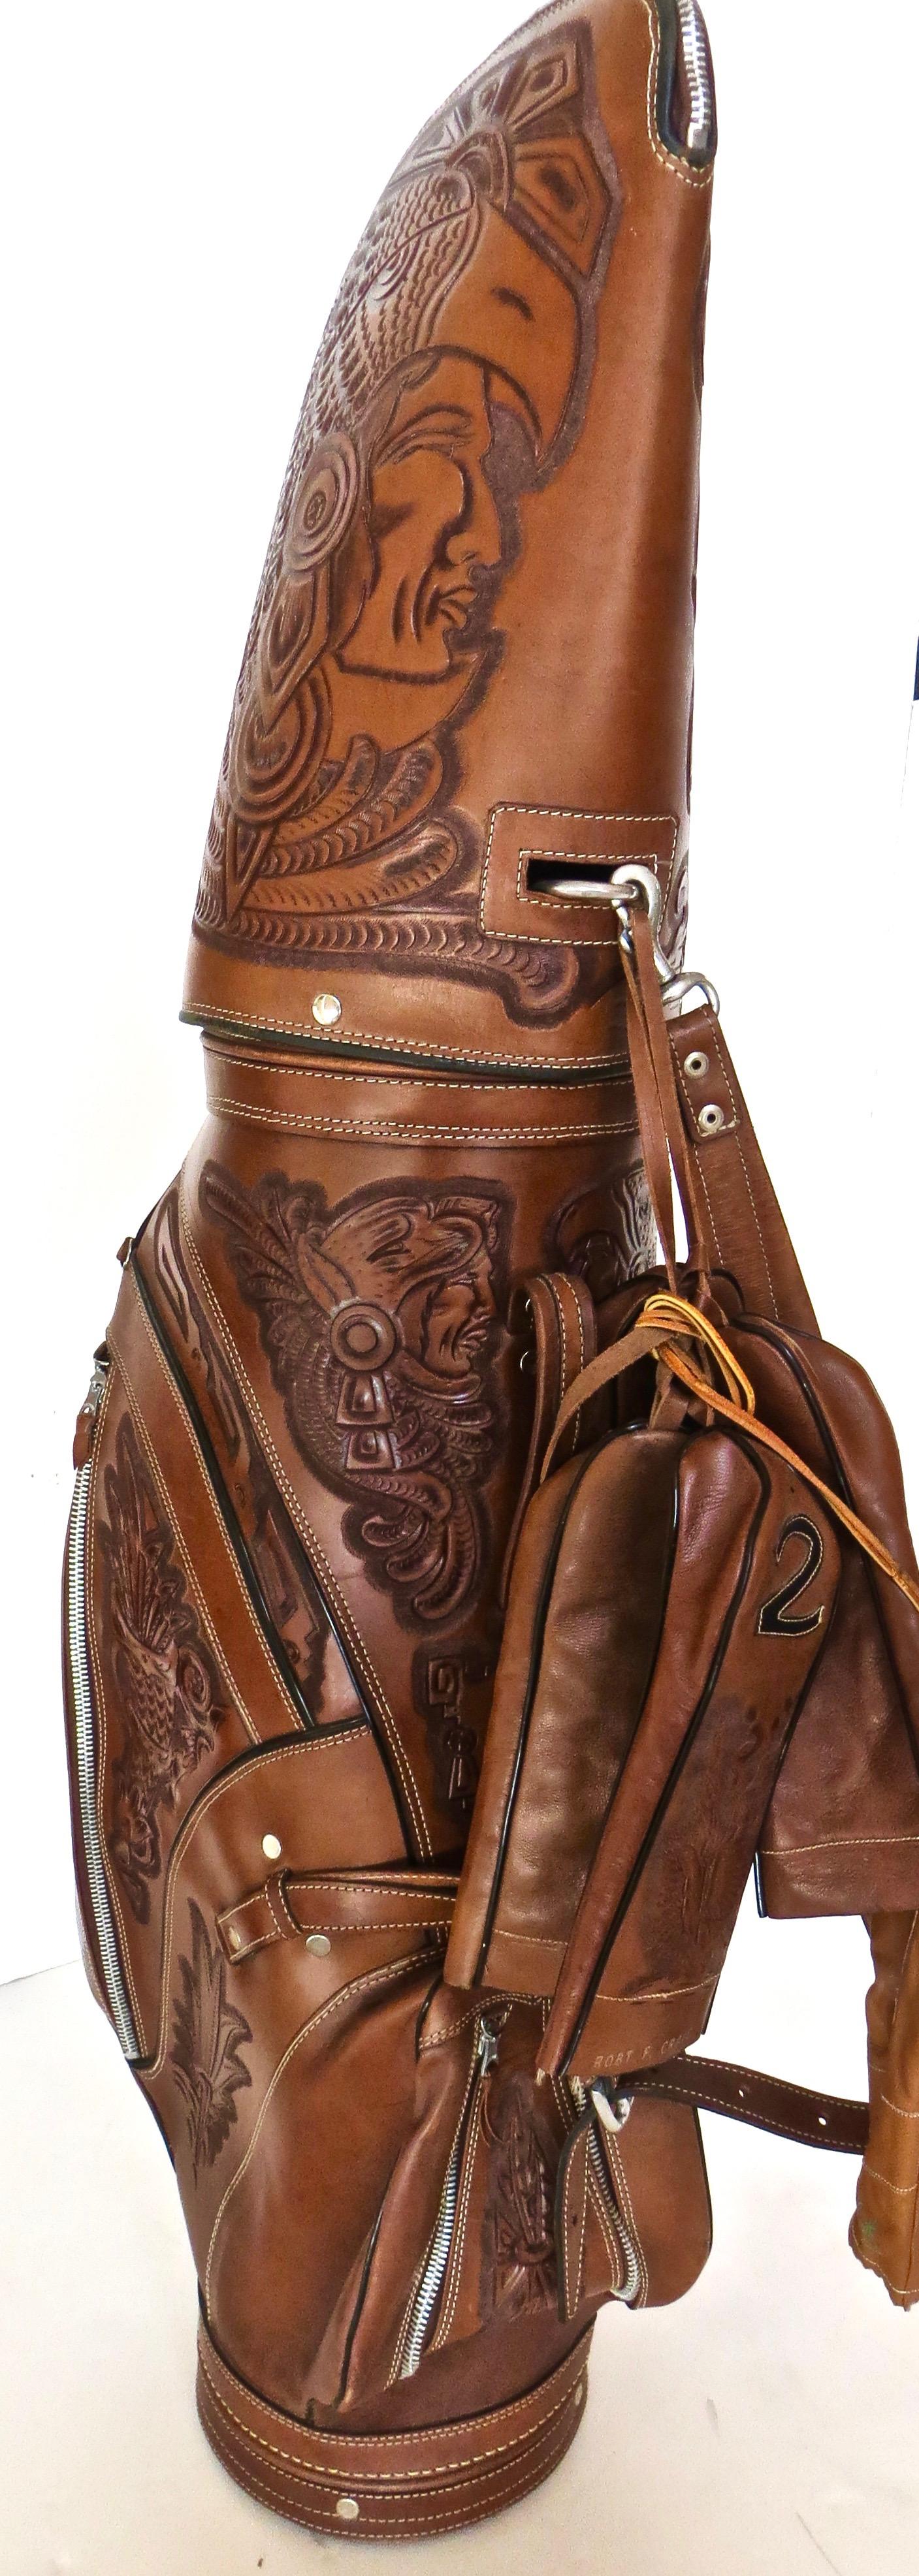 sac de golf vintage